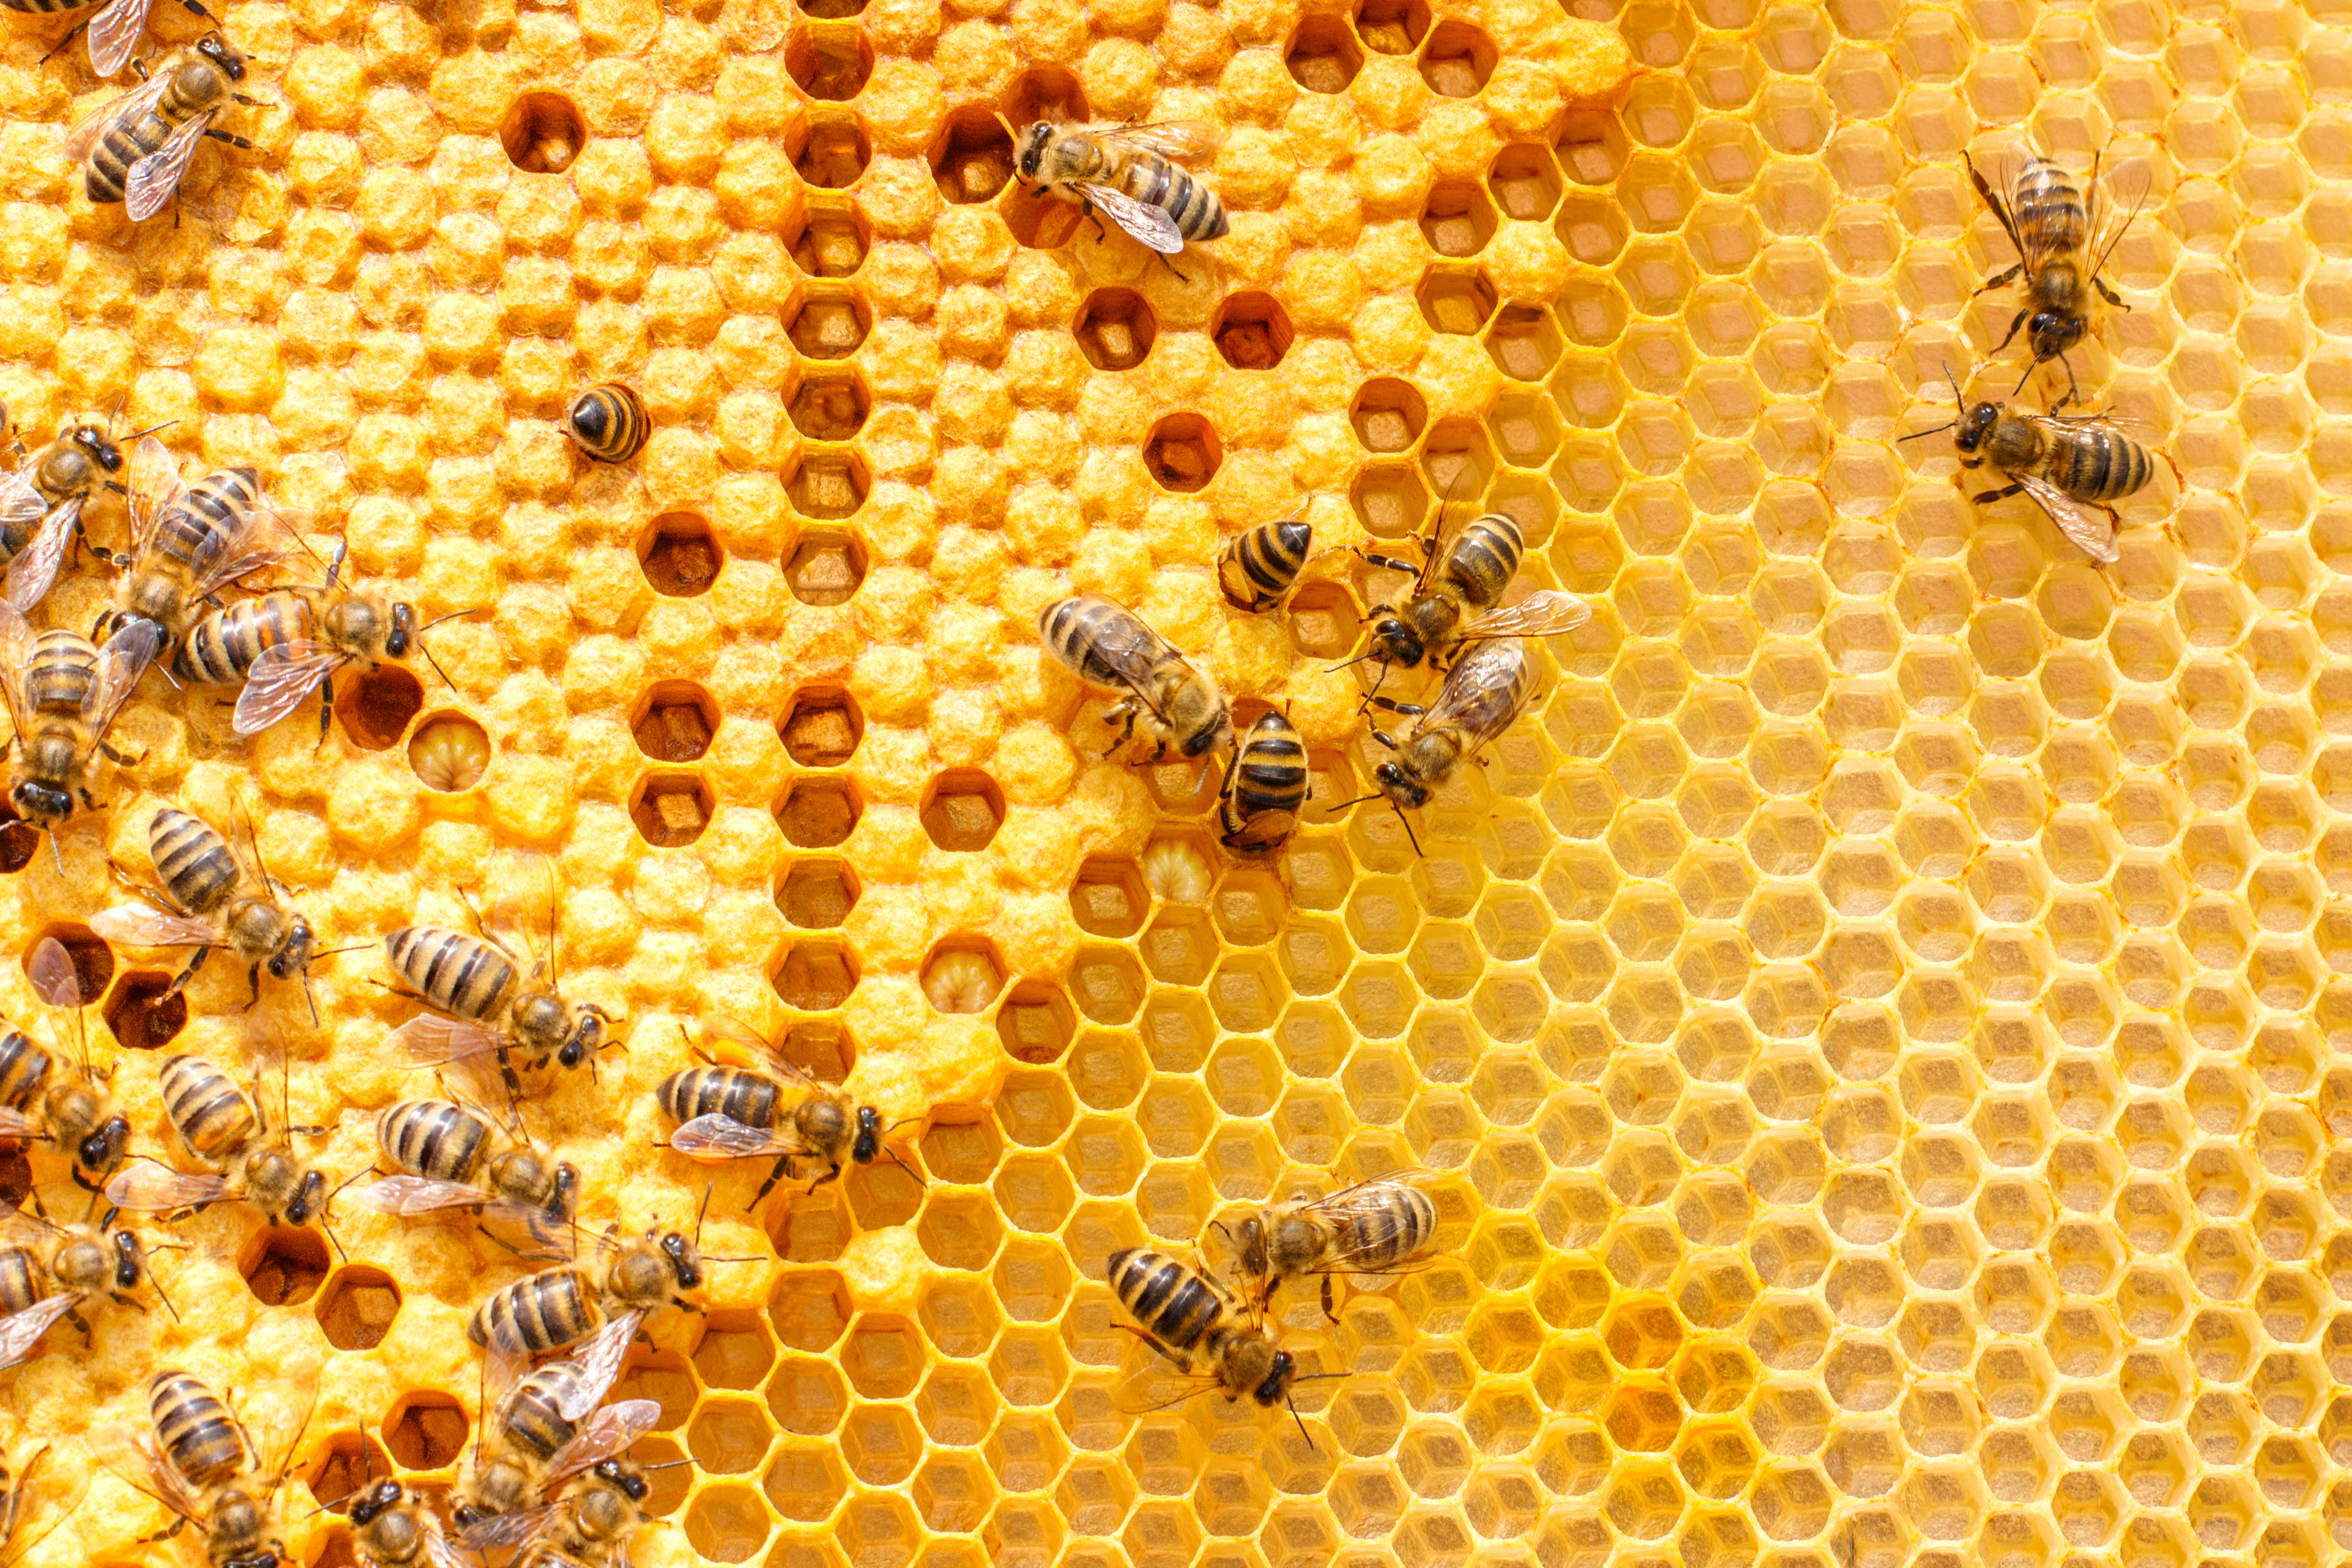 PHC0721_bees-honeycomb.jpg